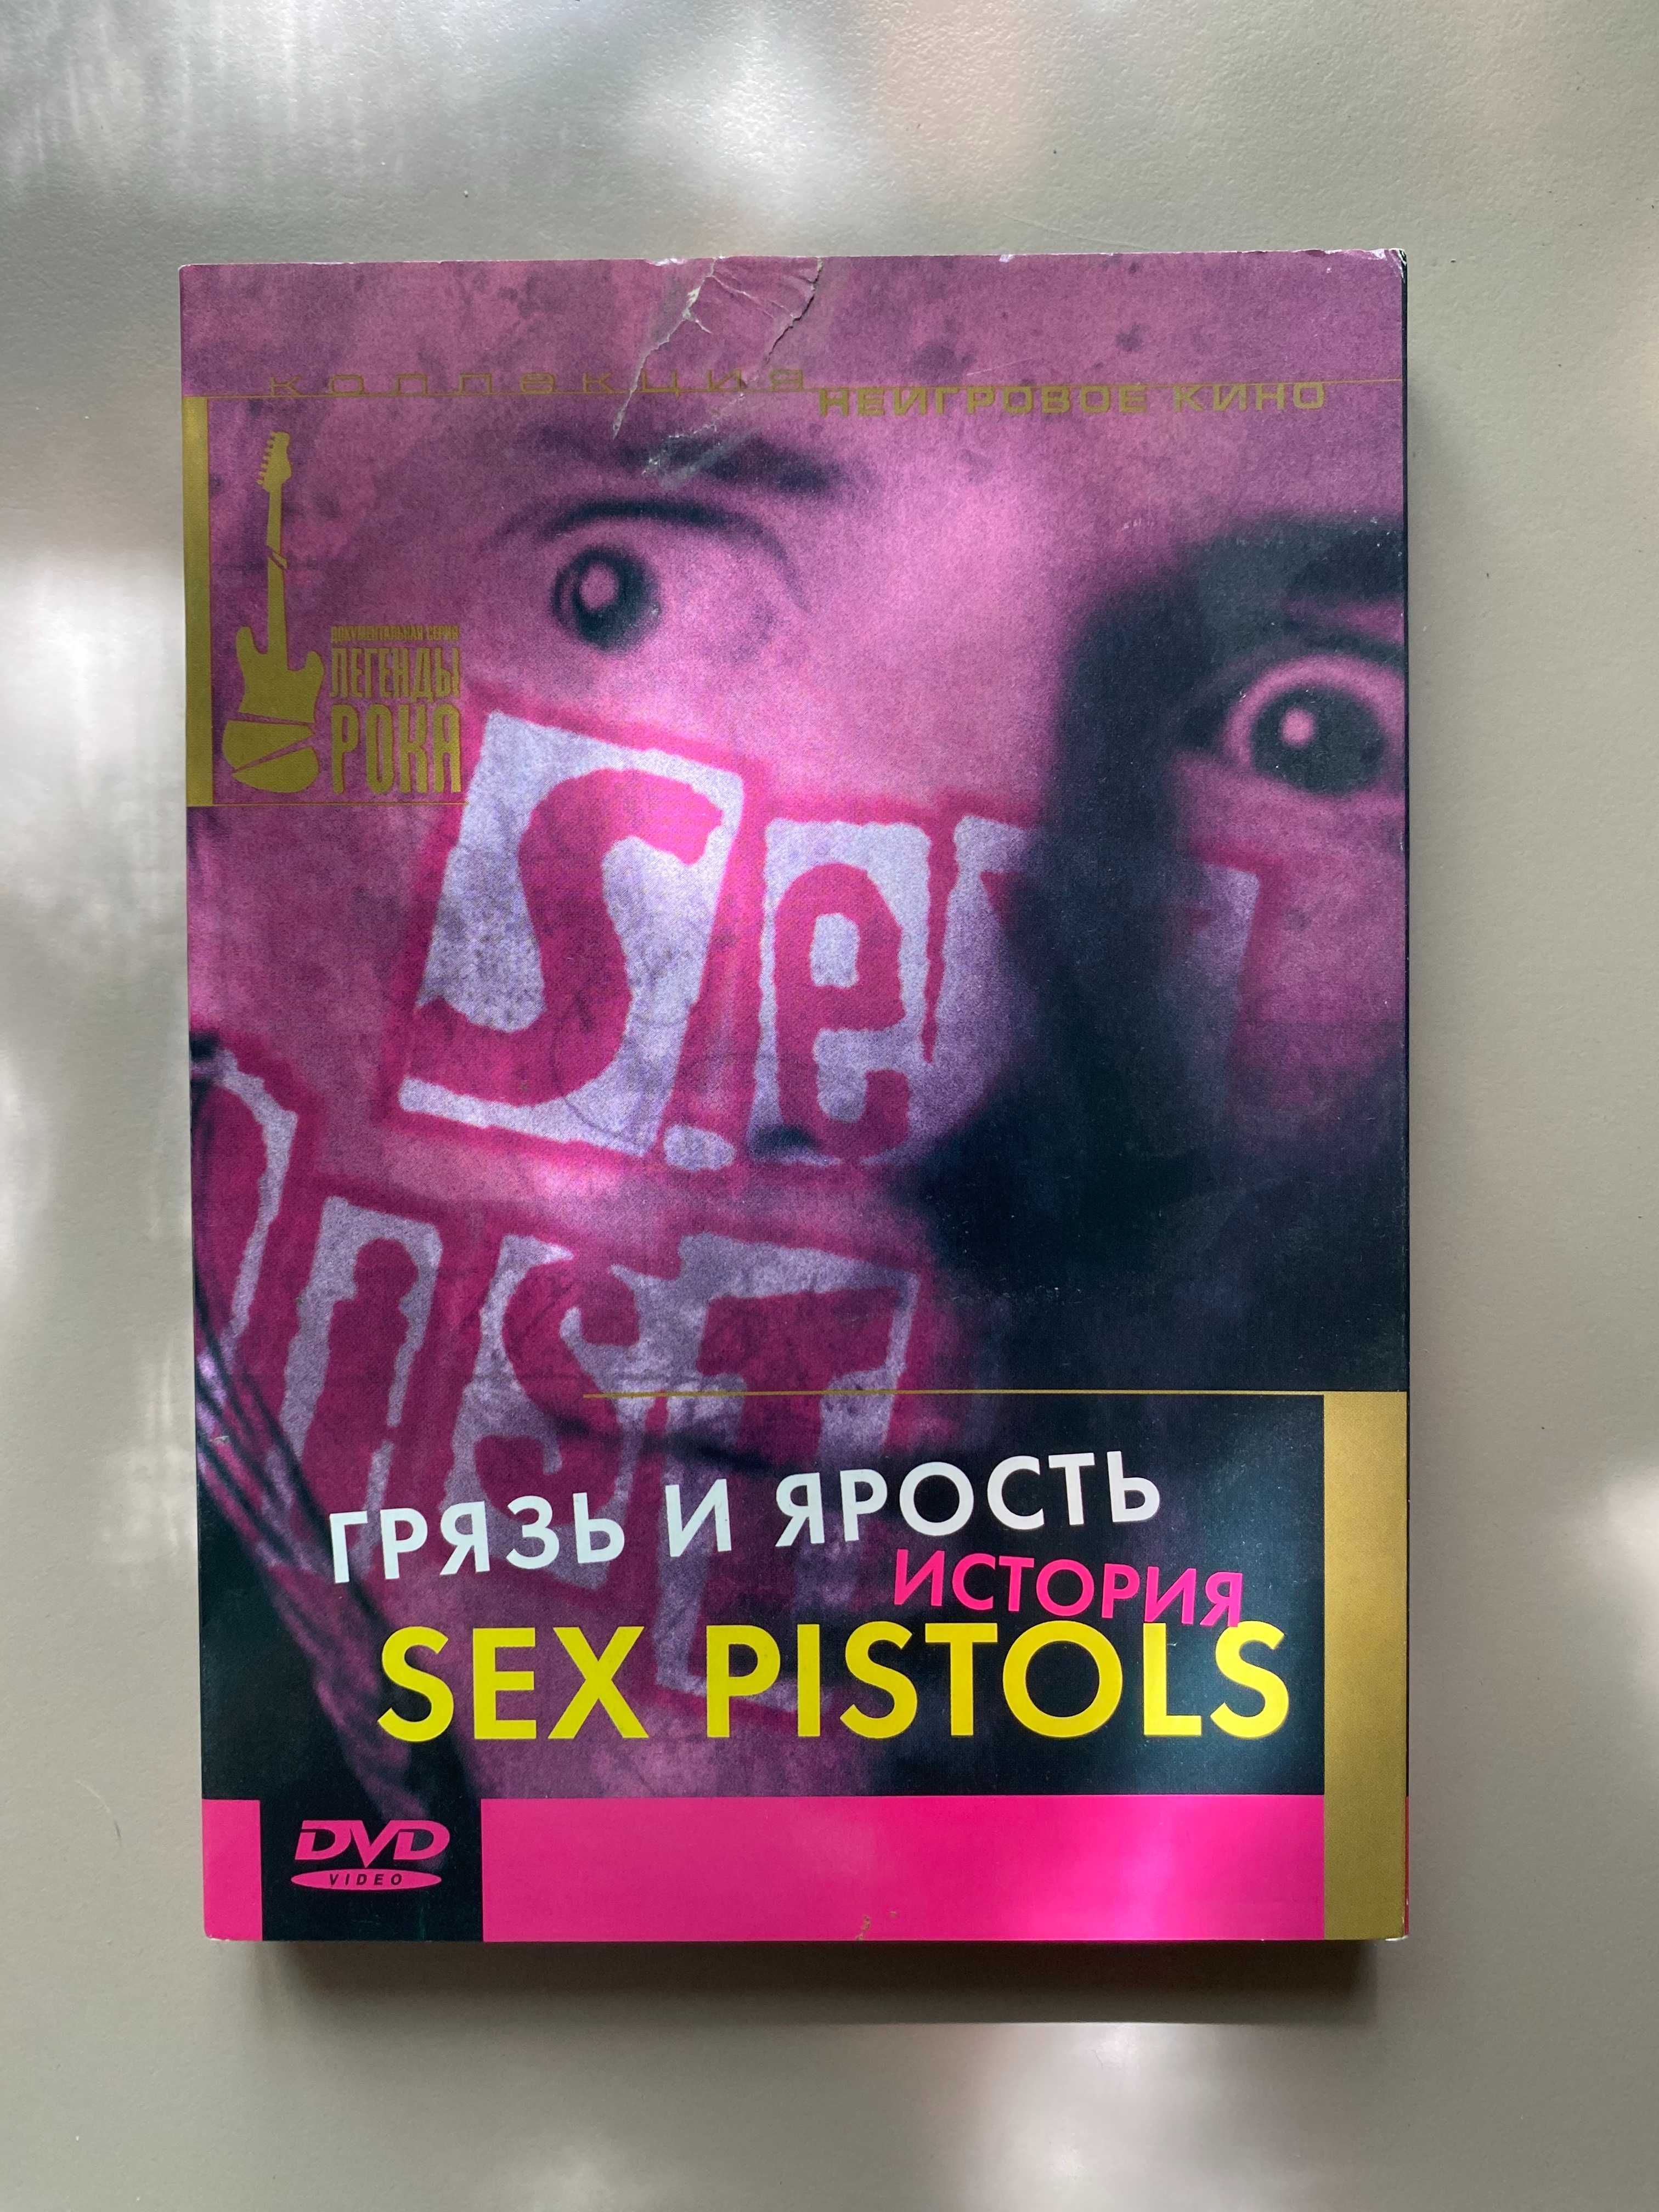 Документальний фільм "Грязь и ярость - история Sex Pistols" (DVD)